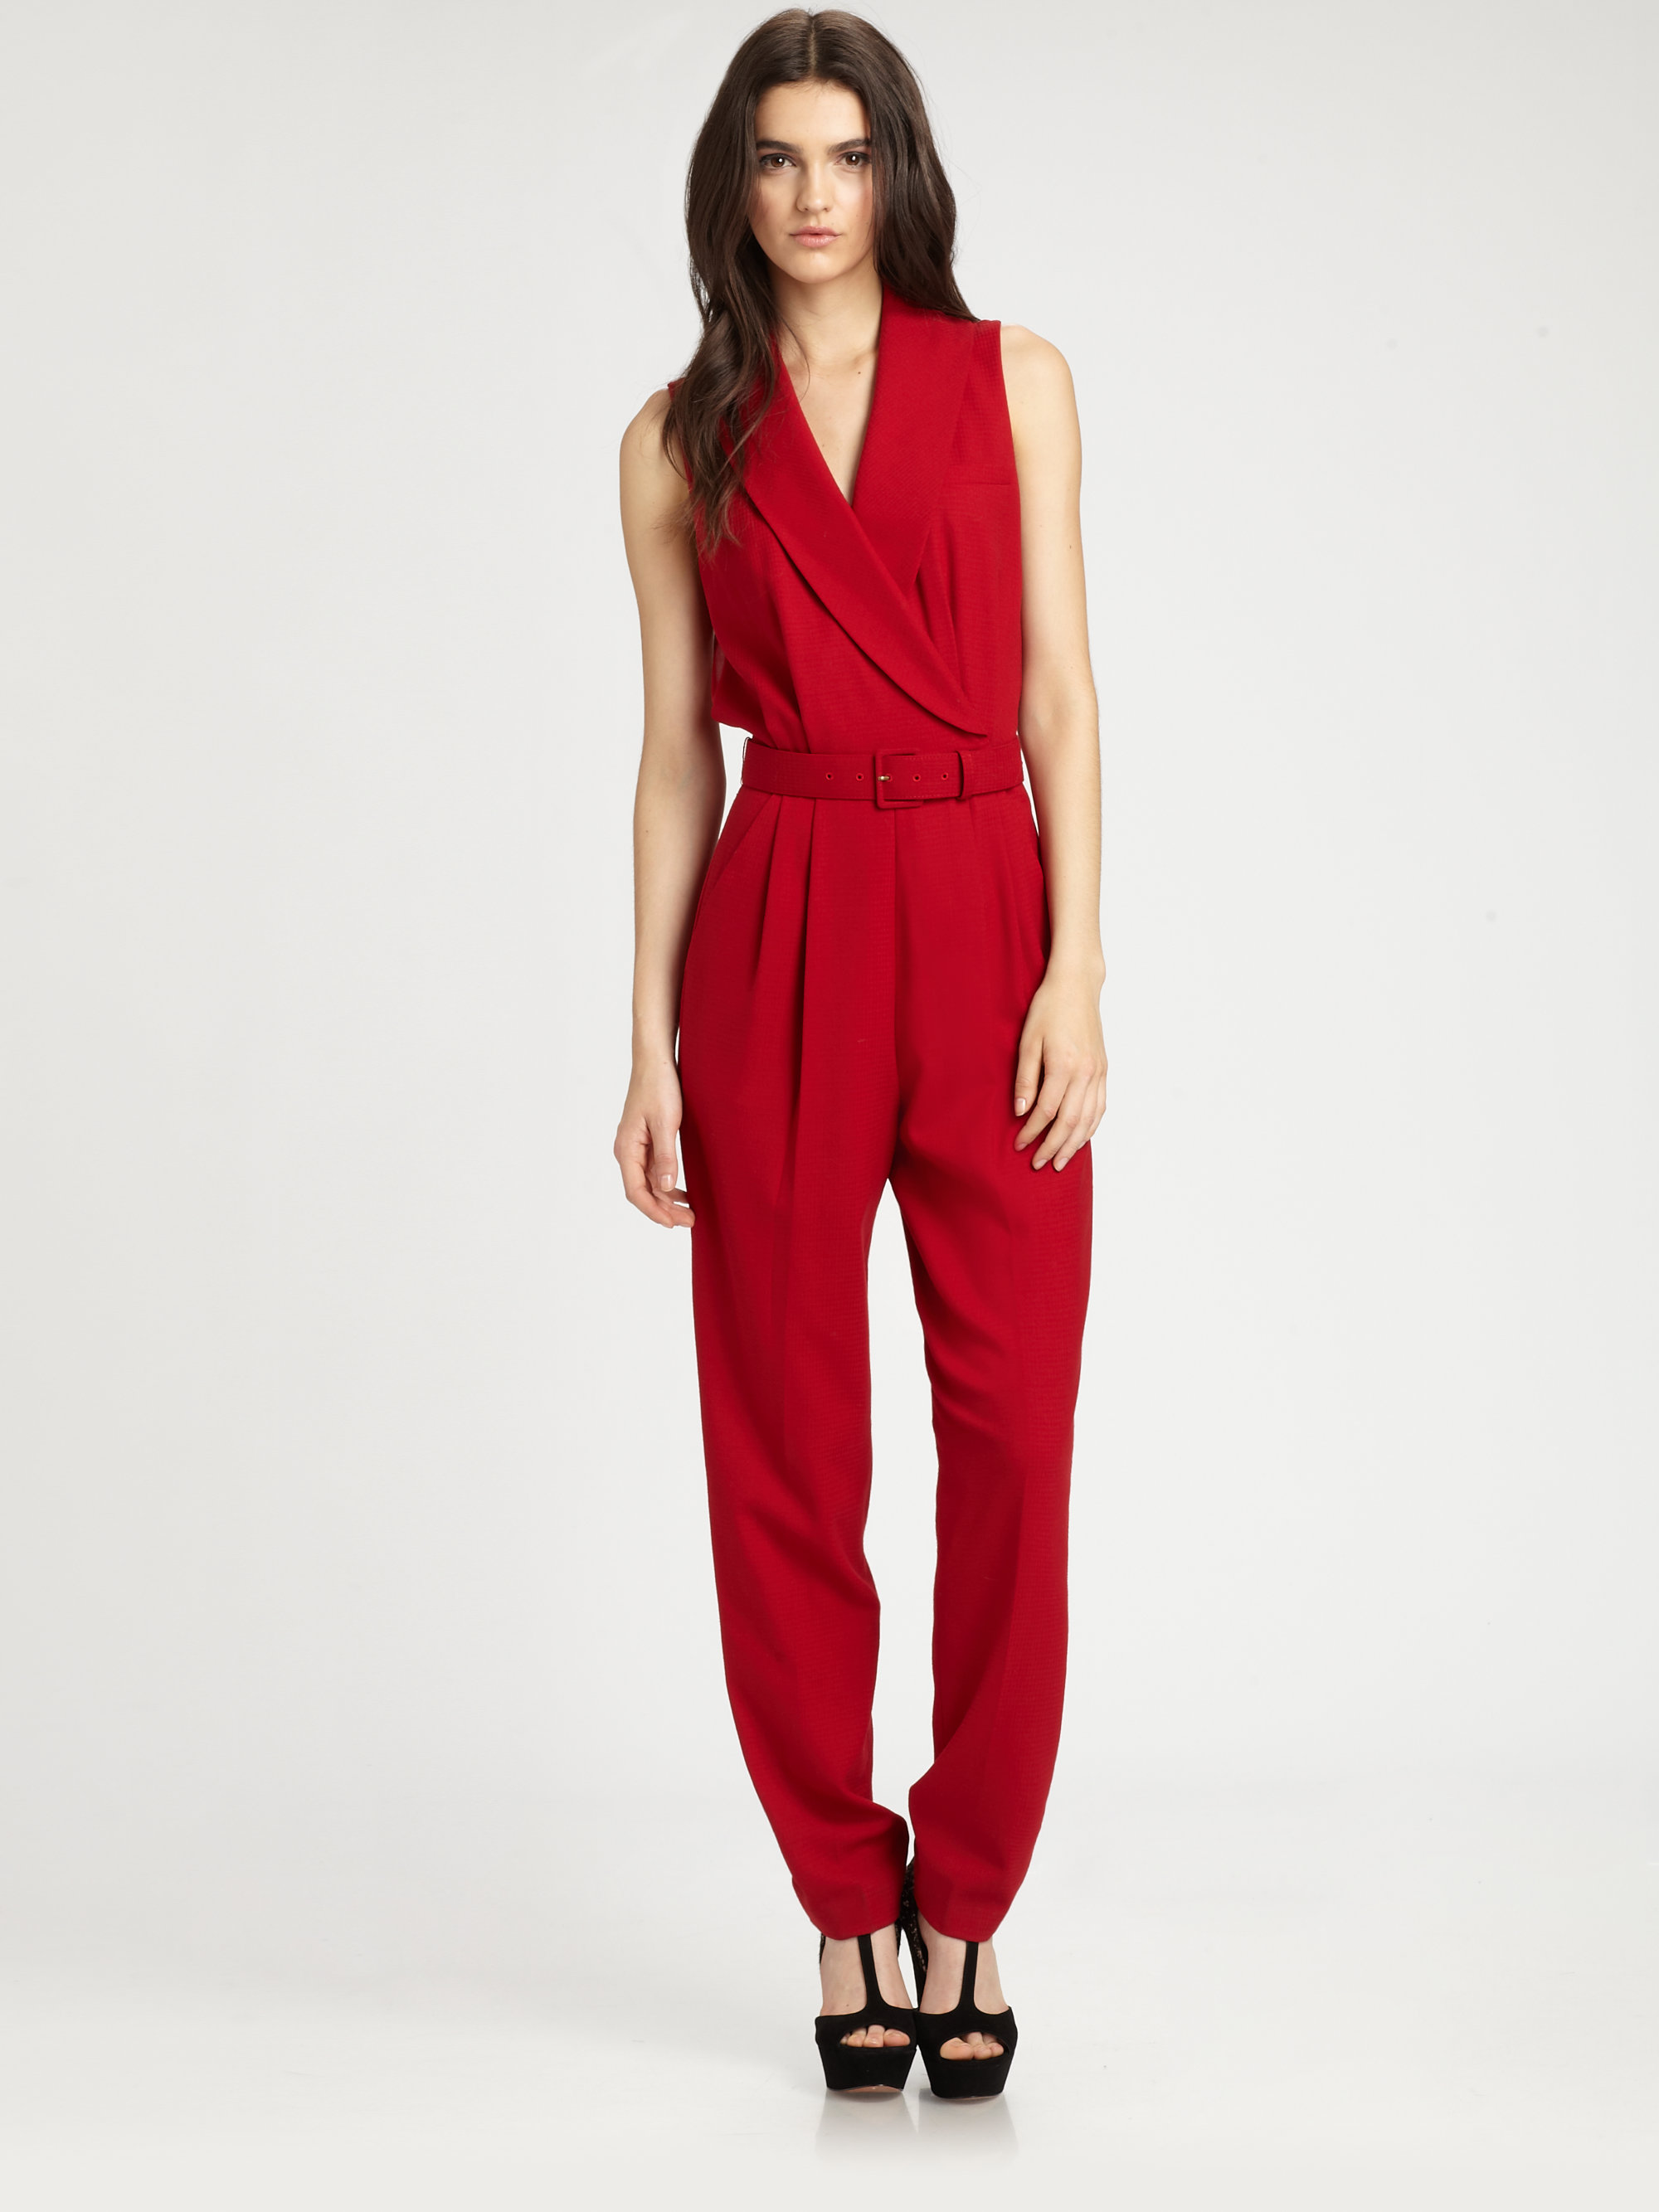 Lyst - Rachel zoe Wool Suiting Jumpsuit in Red